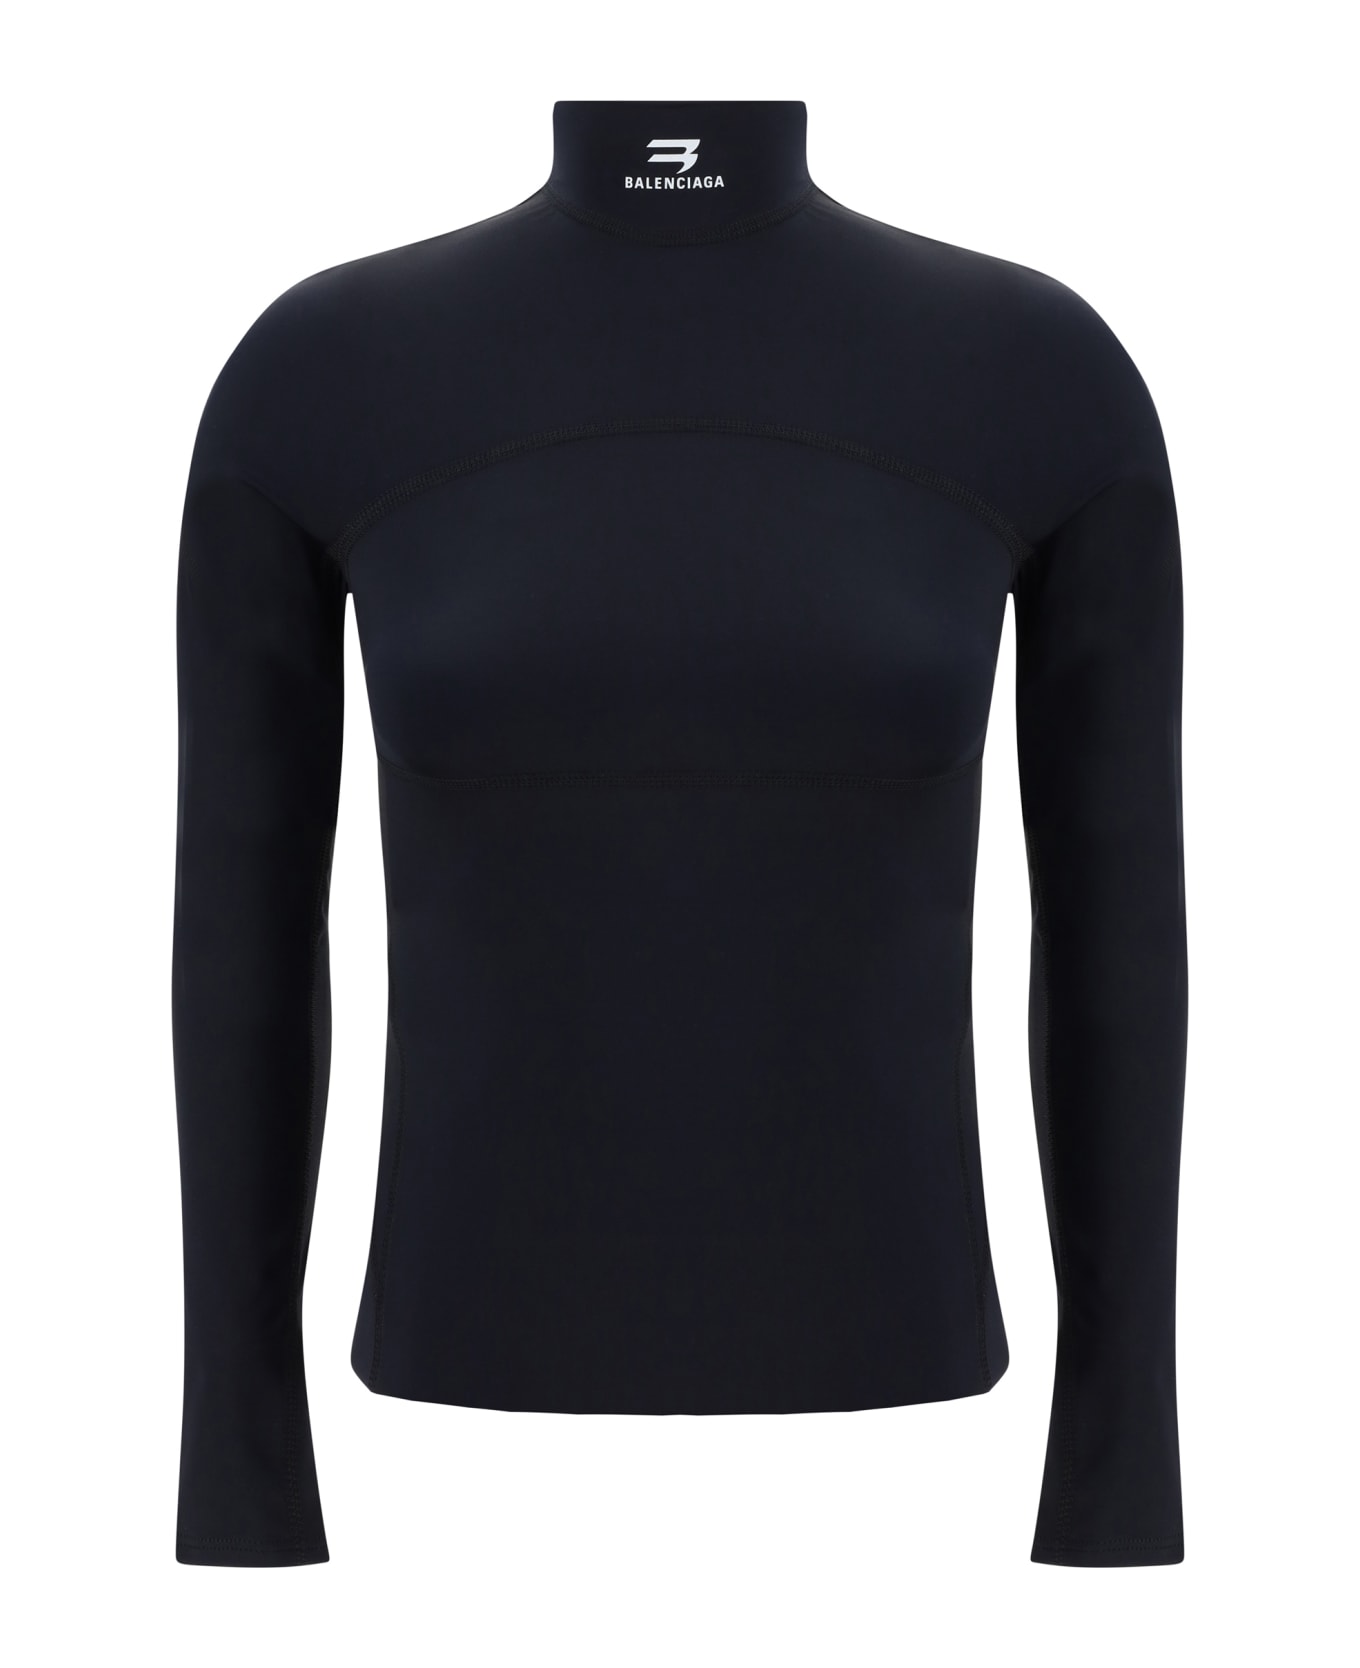 Balenciaga Long-sleeved Jersey - Black